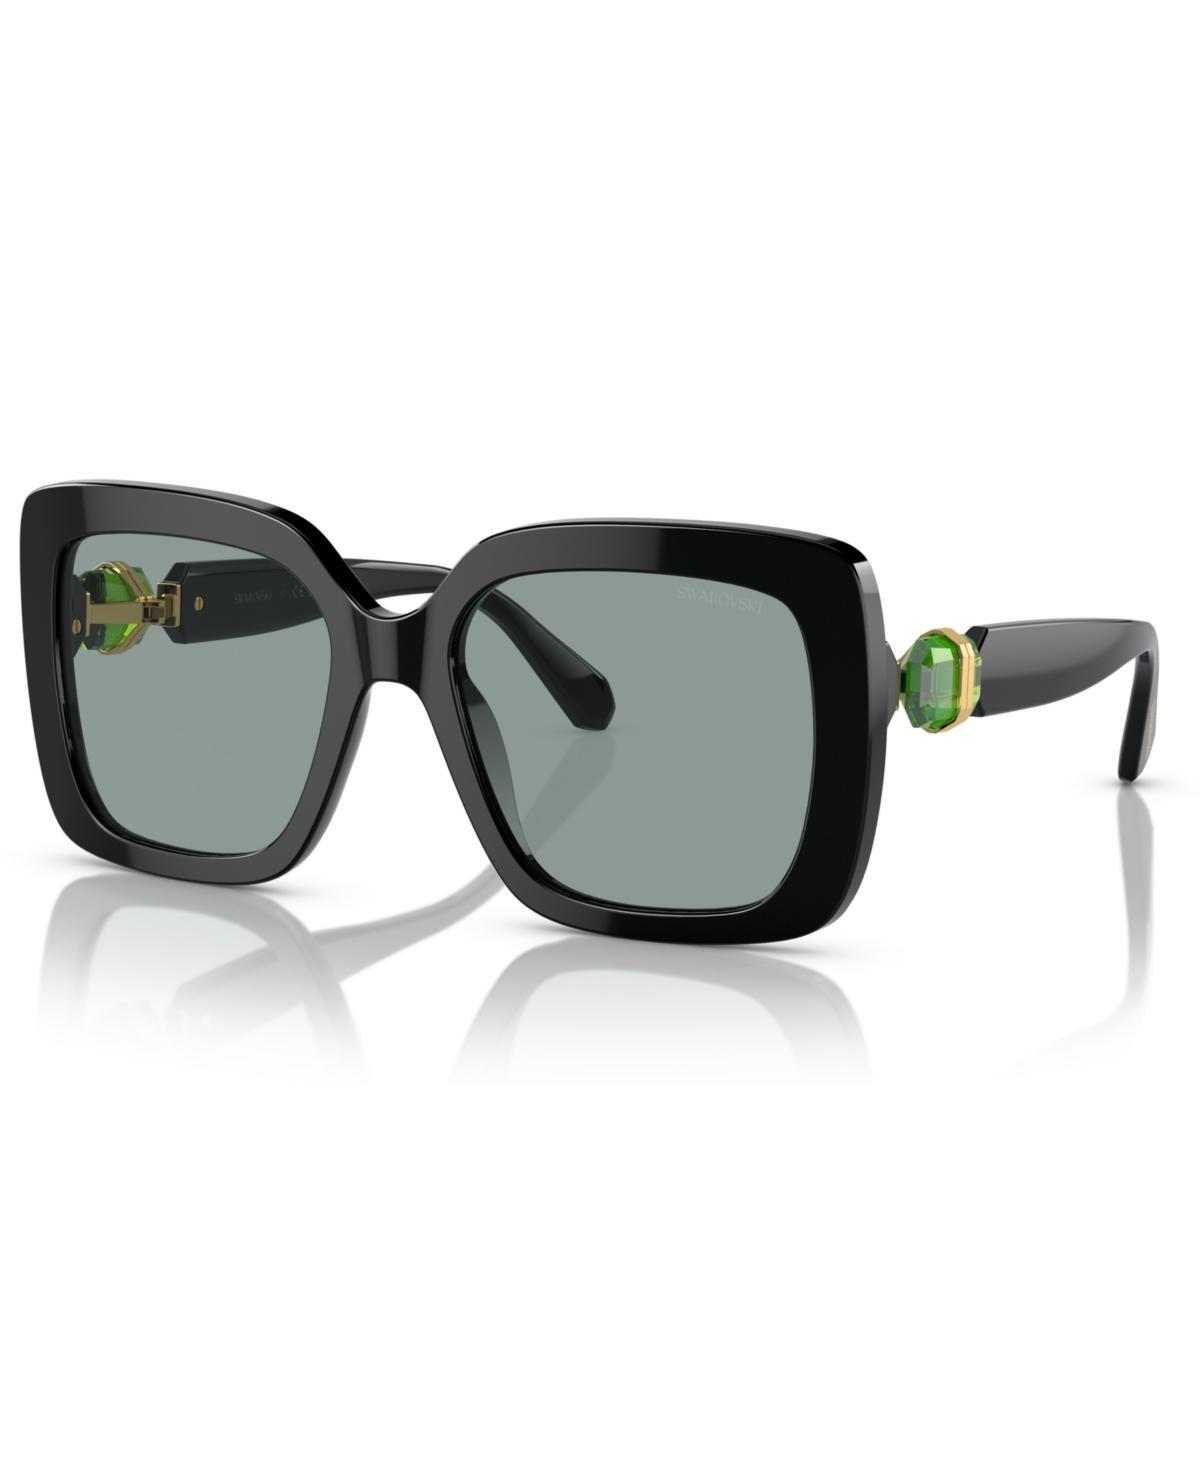 Swarovski 55mm Square Sunglasses Product Image